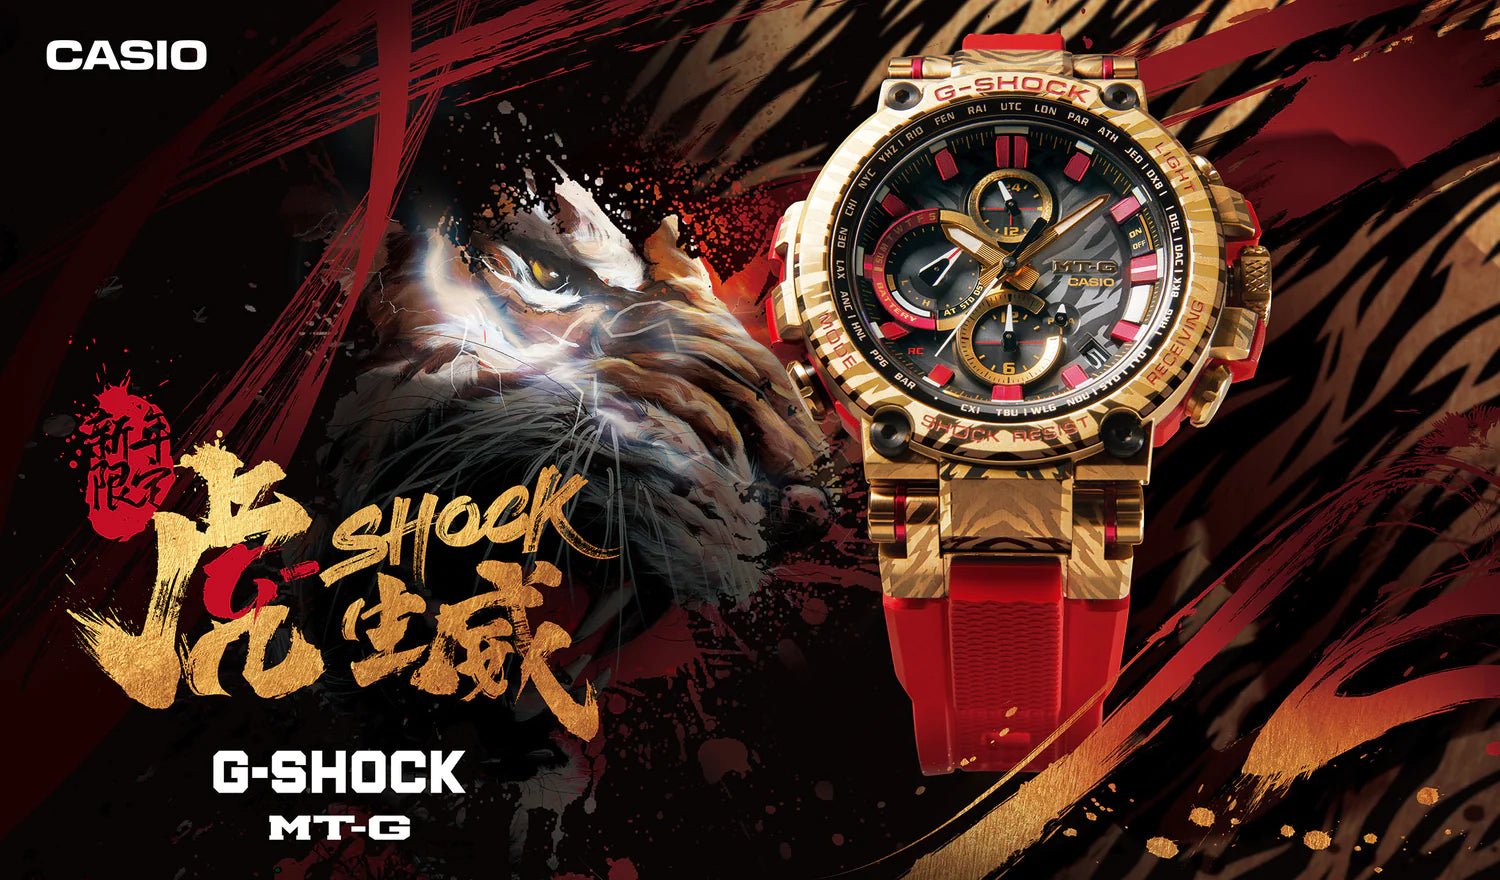 G-Shock Celebrates the Lunar New year with the MTGB1000CX-4A - CASIO Australia